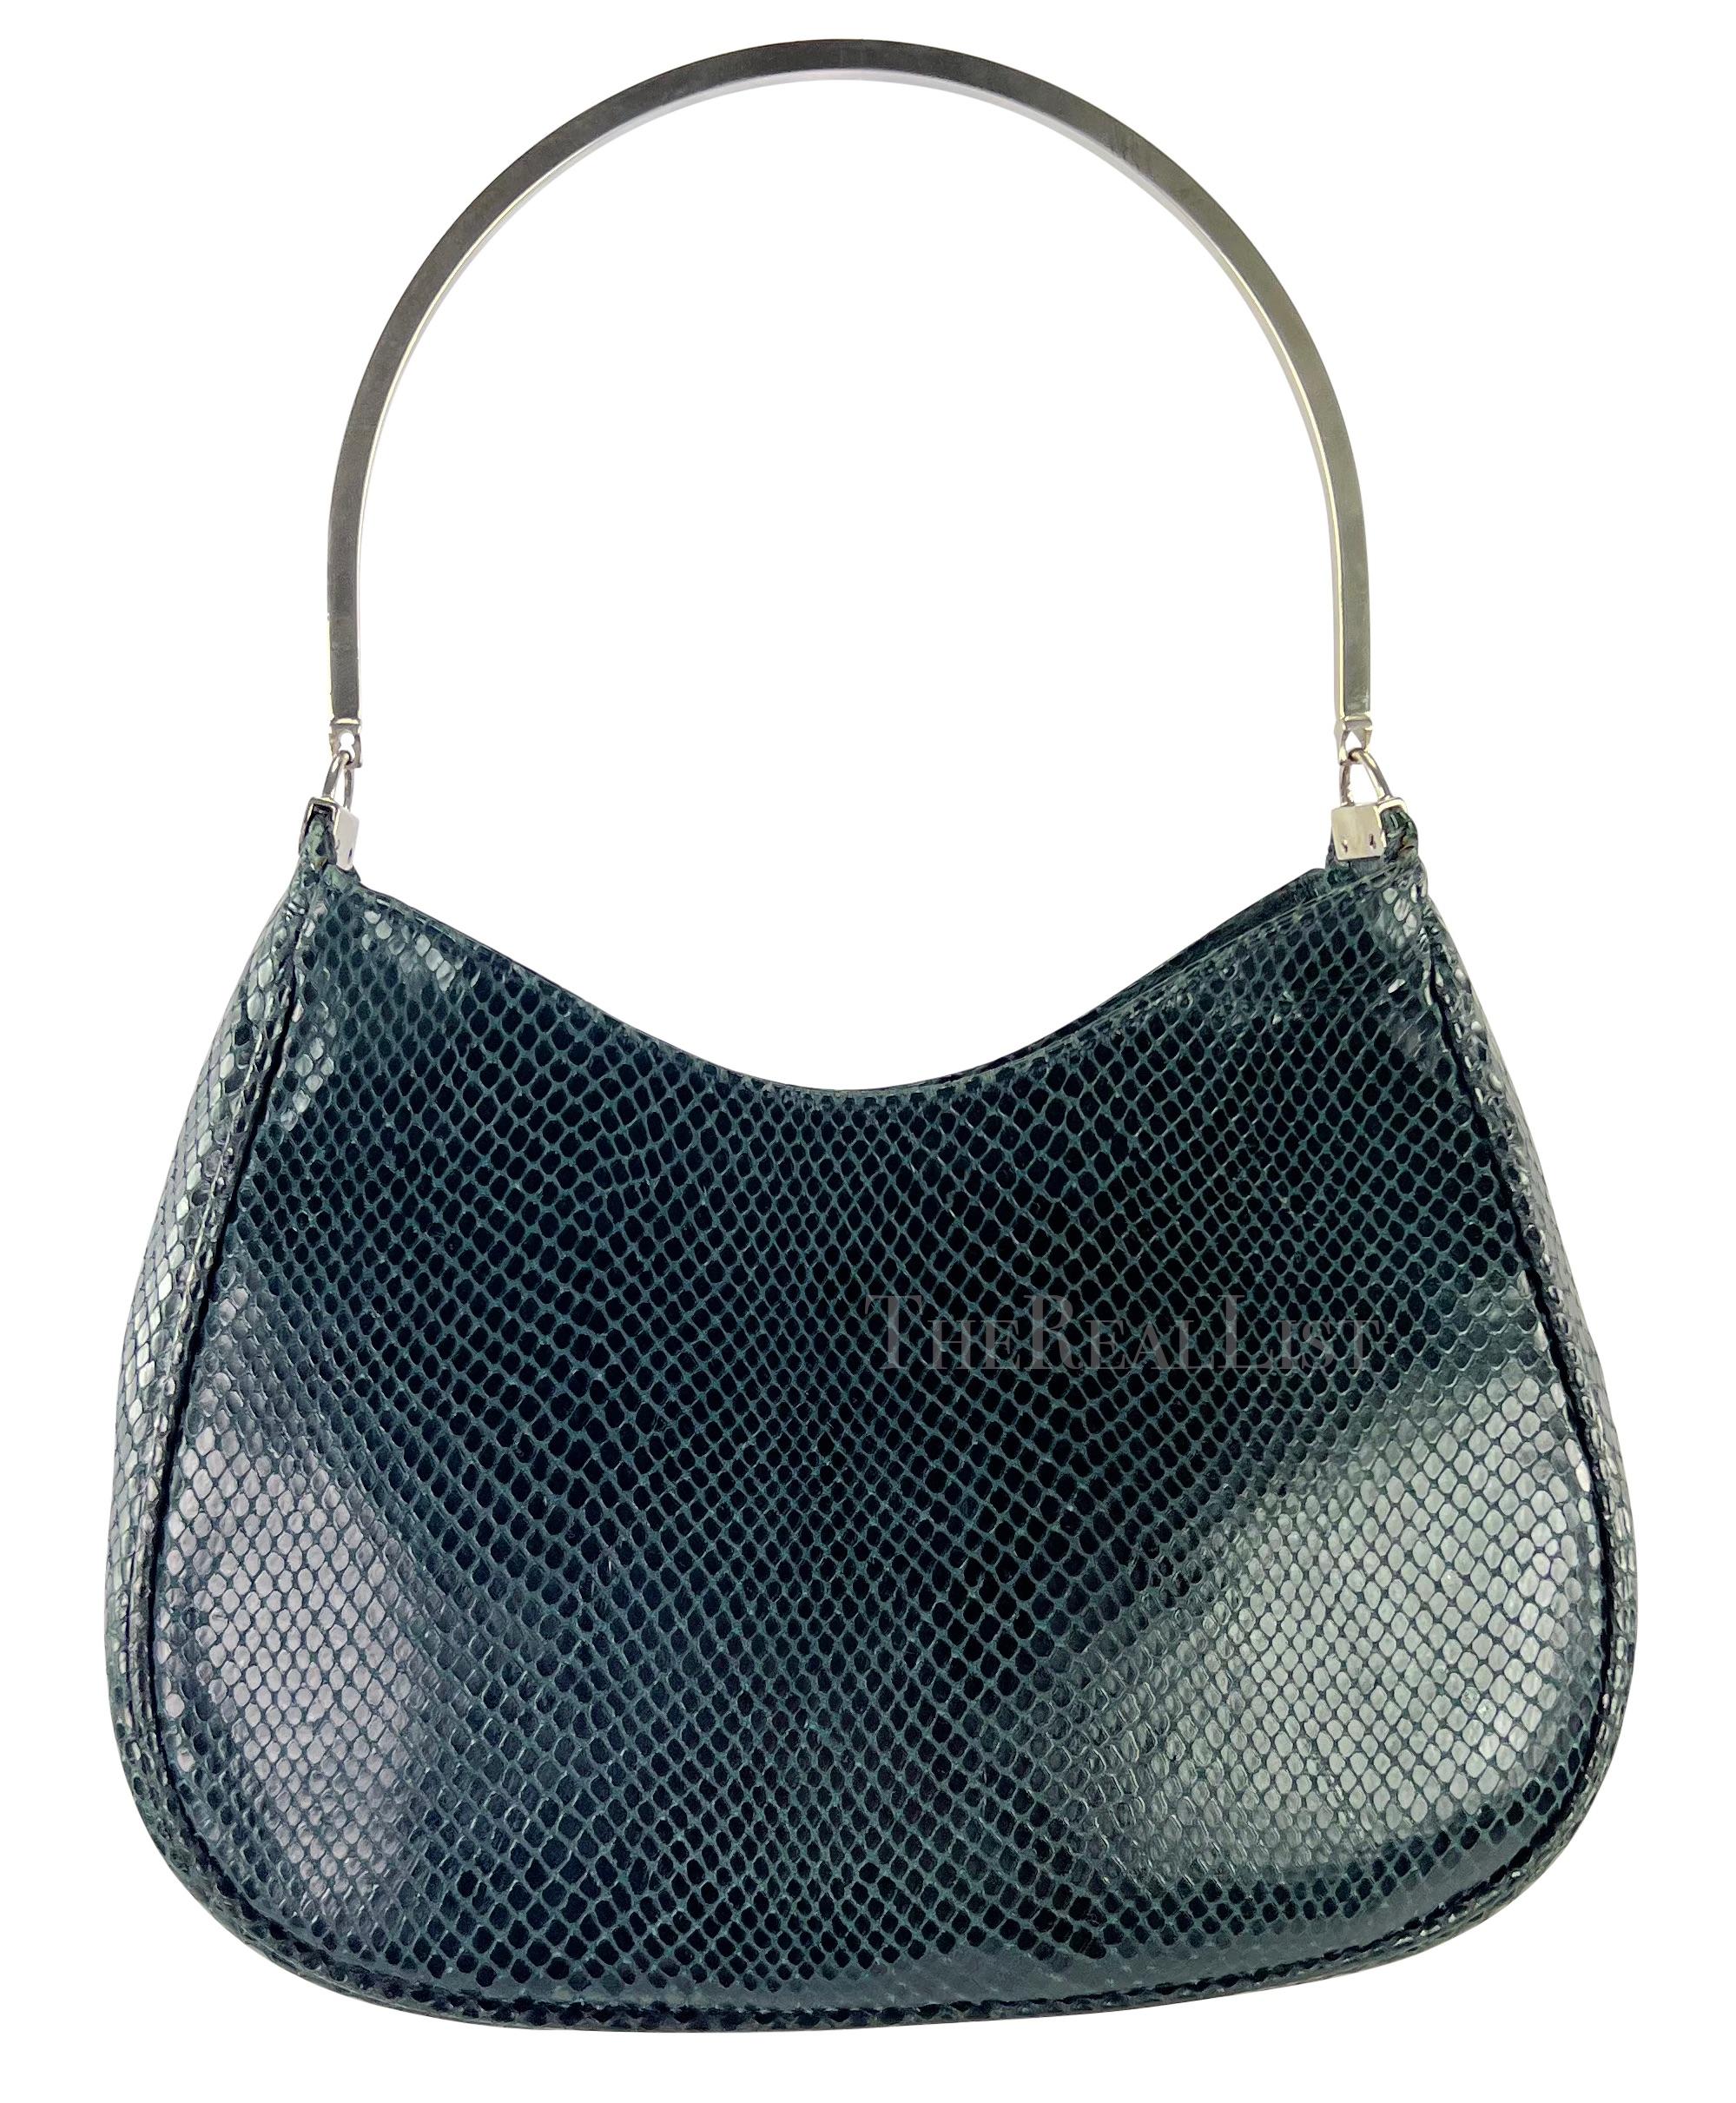 1990s Gianni Versace Couture Teal Python Metal Top Handle Shoulder Bag For Sale 1